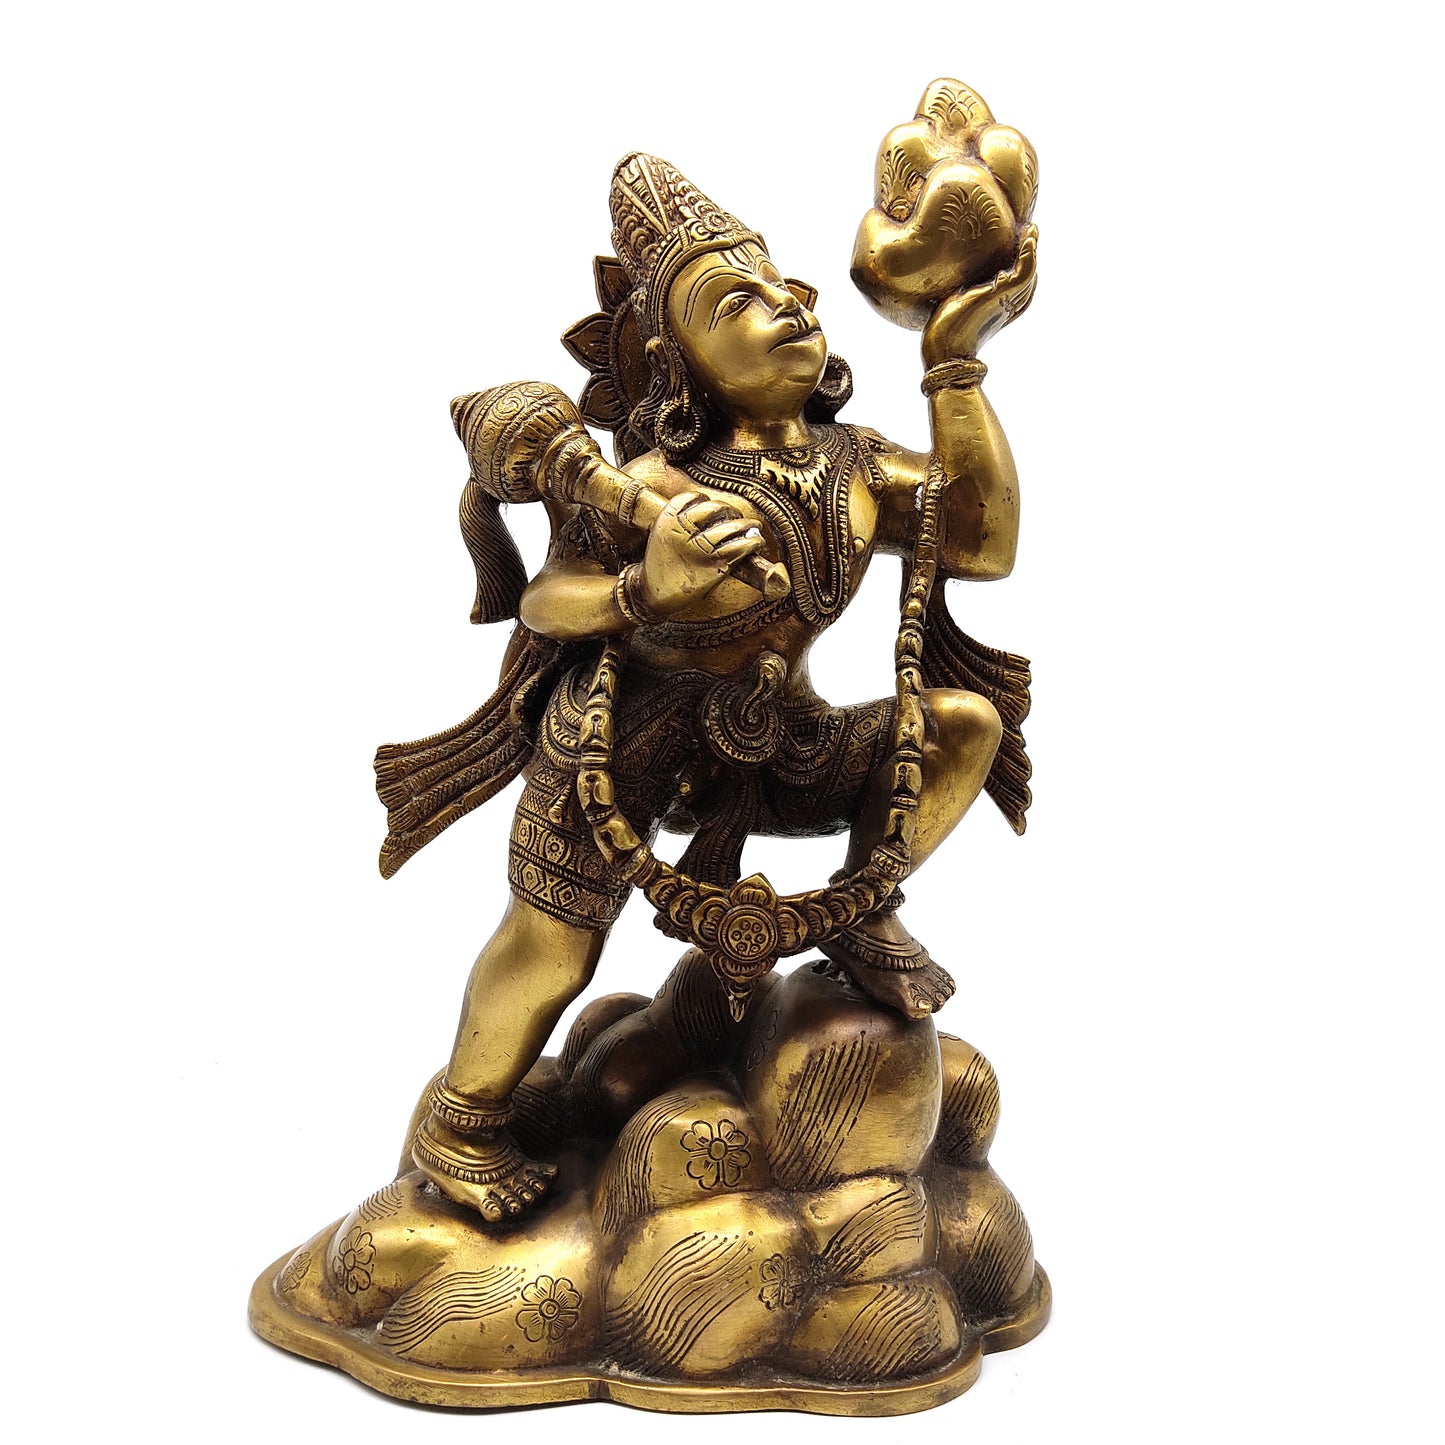 Brass India Lord Hanuman Hanumanji Monkey God Murthi Statue Handcrafted 12.5"